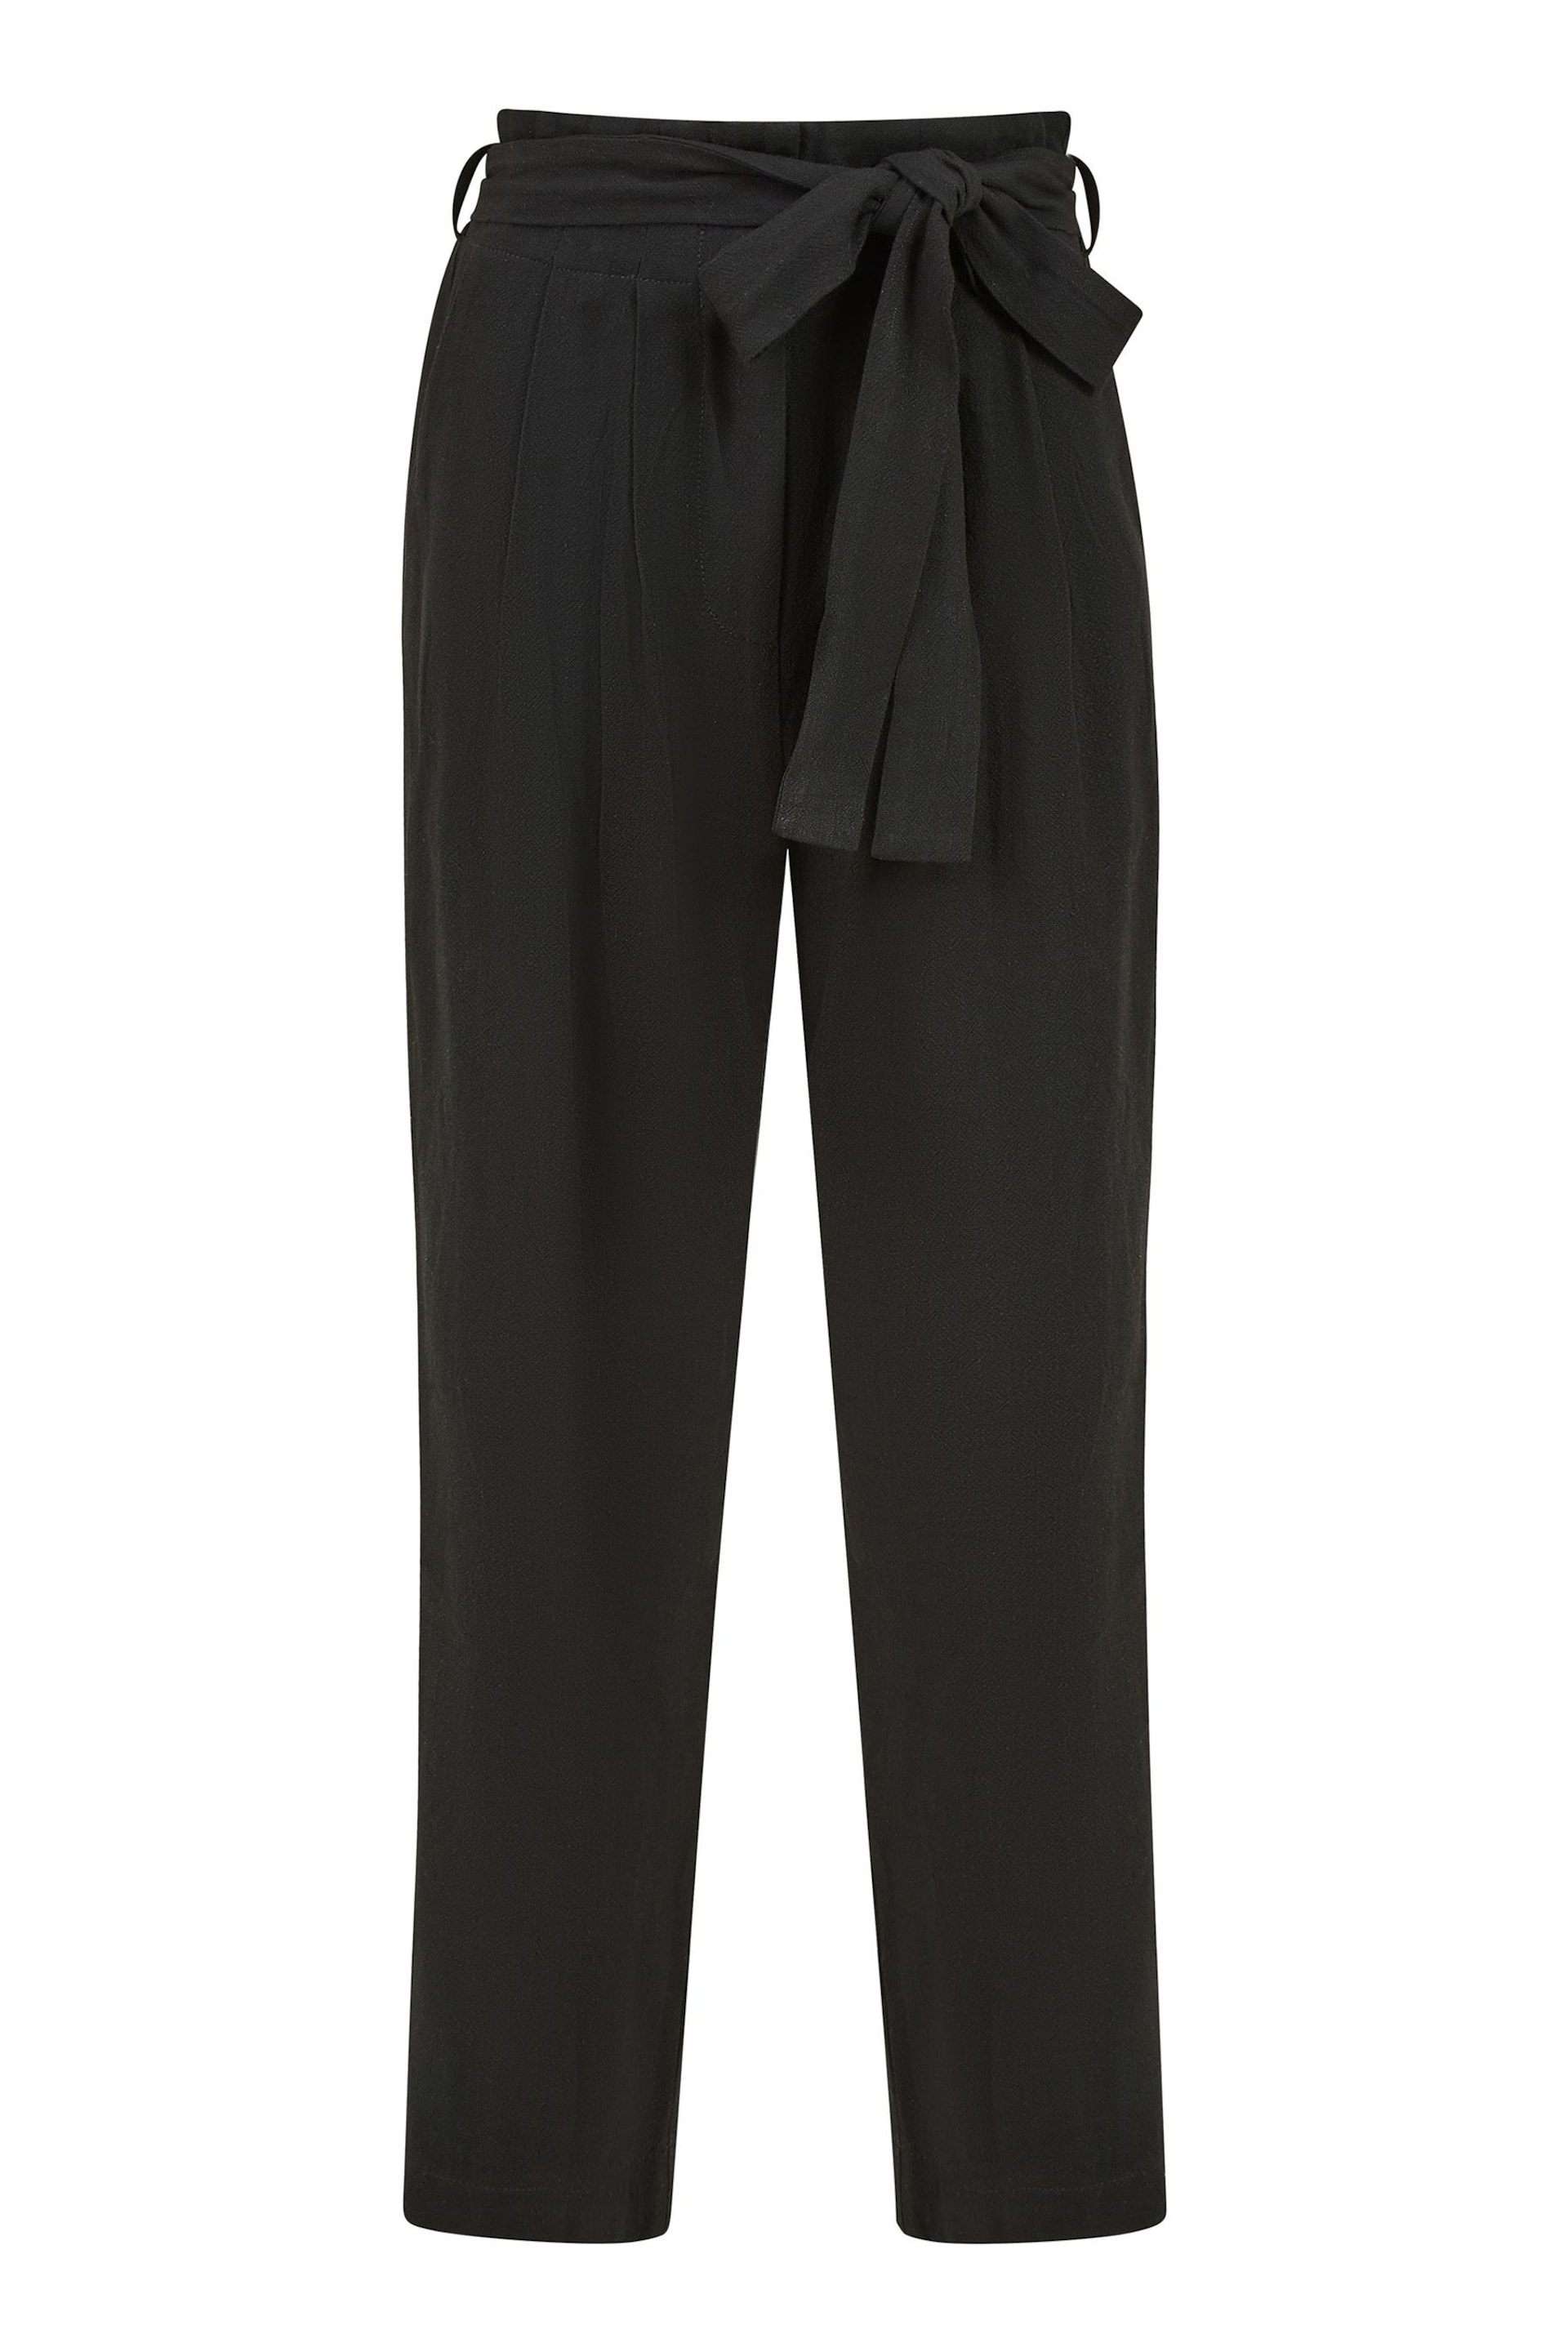 Yumi Black Linen Blend Tie Waist Trousers - Image 5 of 5